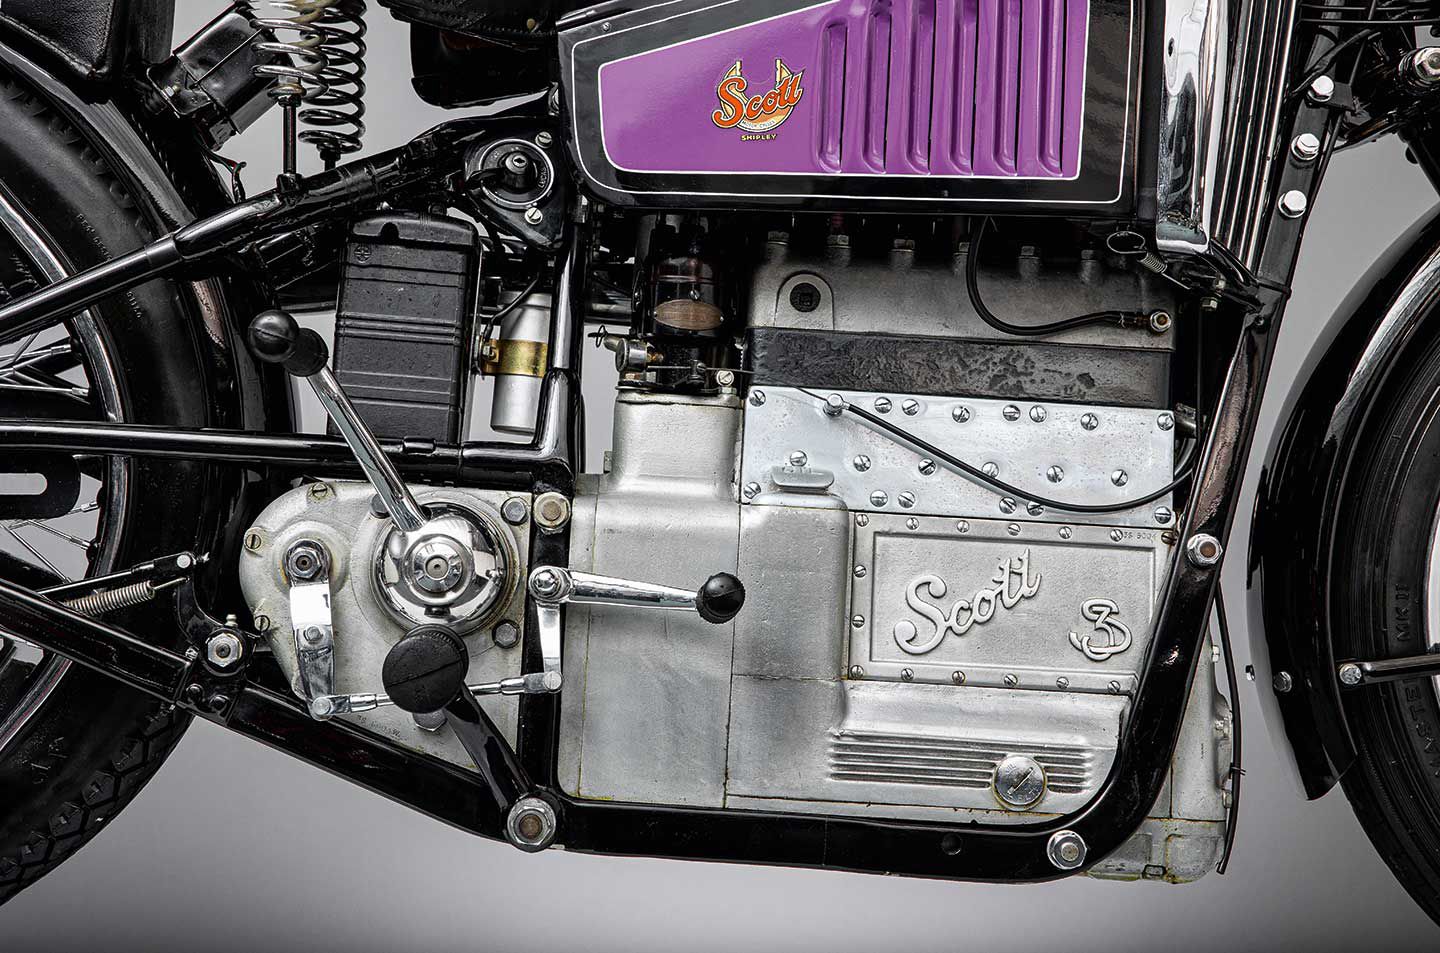 Detail of Scott Model 3S crankcase, made of Elektron—a proprietary high-performance magnesium alloy.